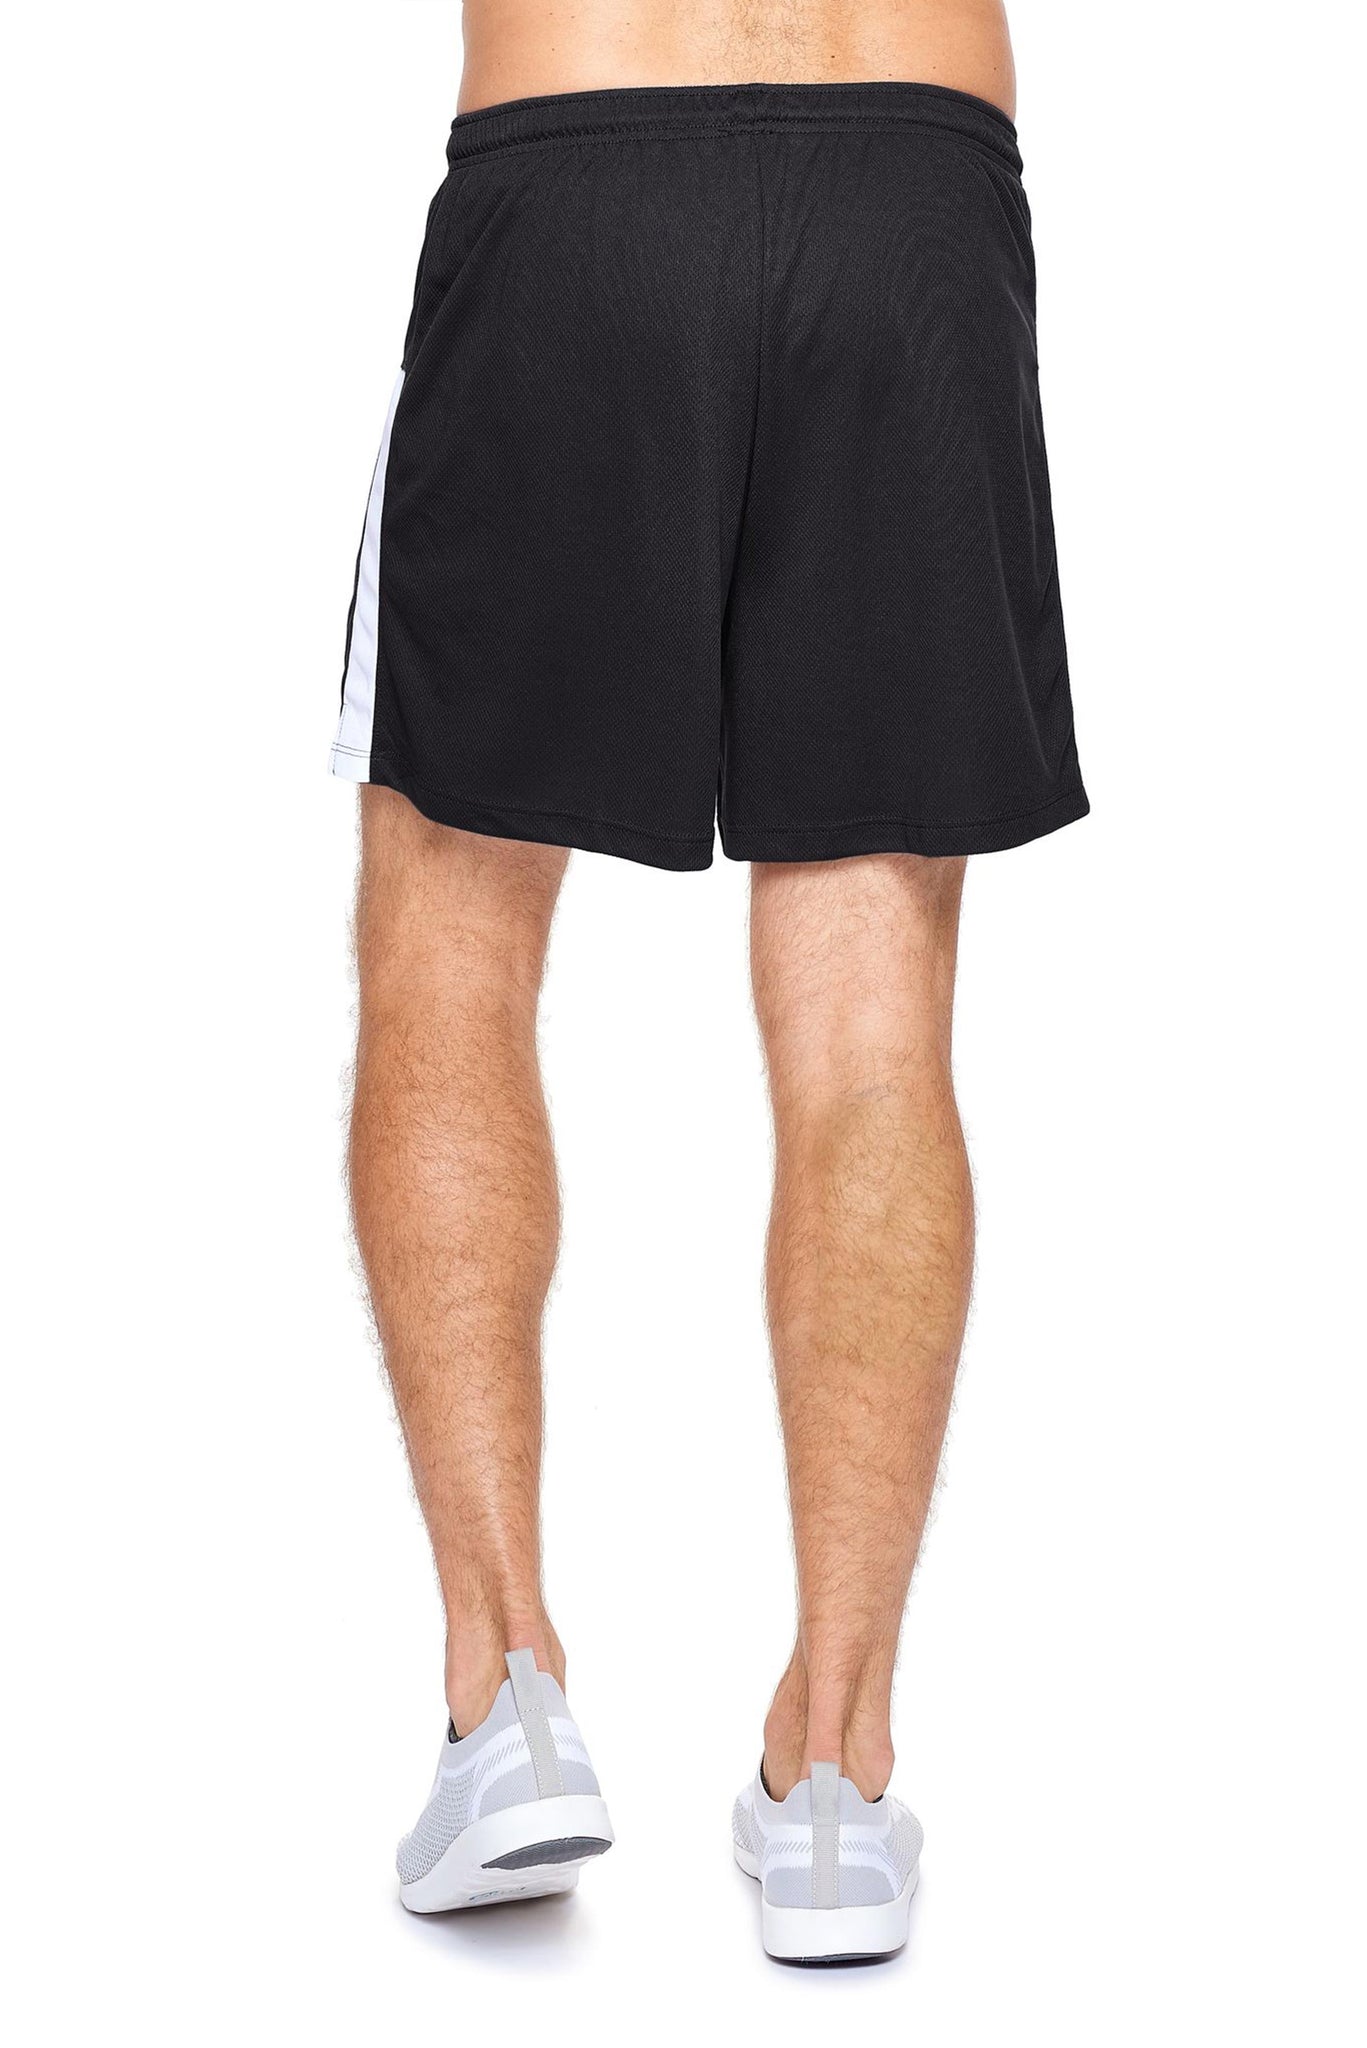 Expert Brand Wholesale Blanks Made in USA Men's Oxymesh™ Premium Shorts in black image 3#black